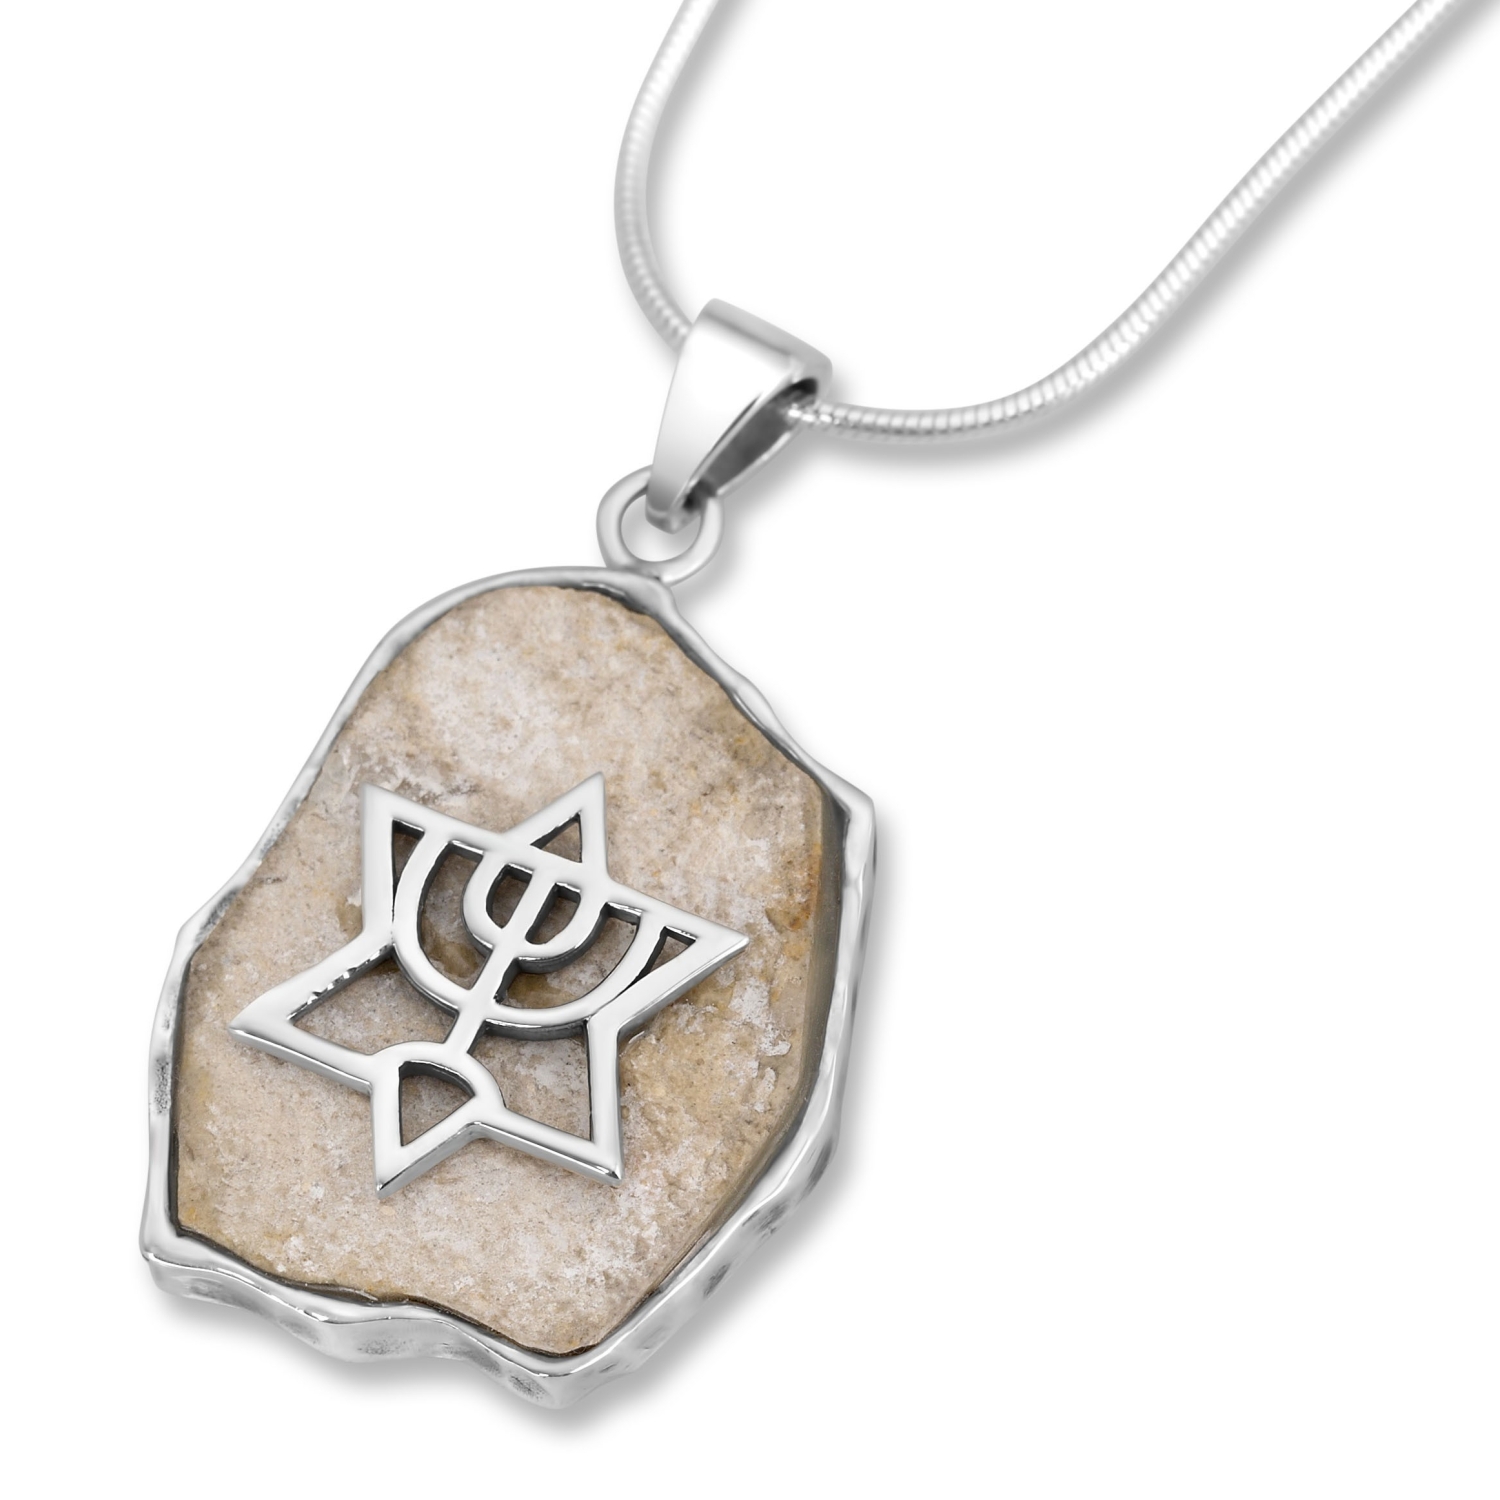 Jerusalem Stone Necklace with Silver Star of David-Menorah Design - 1